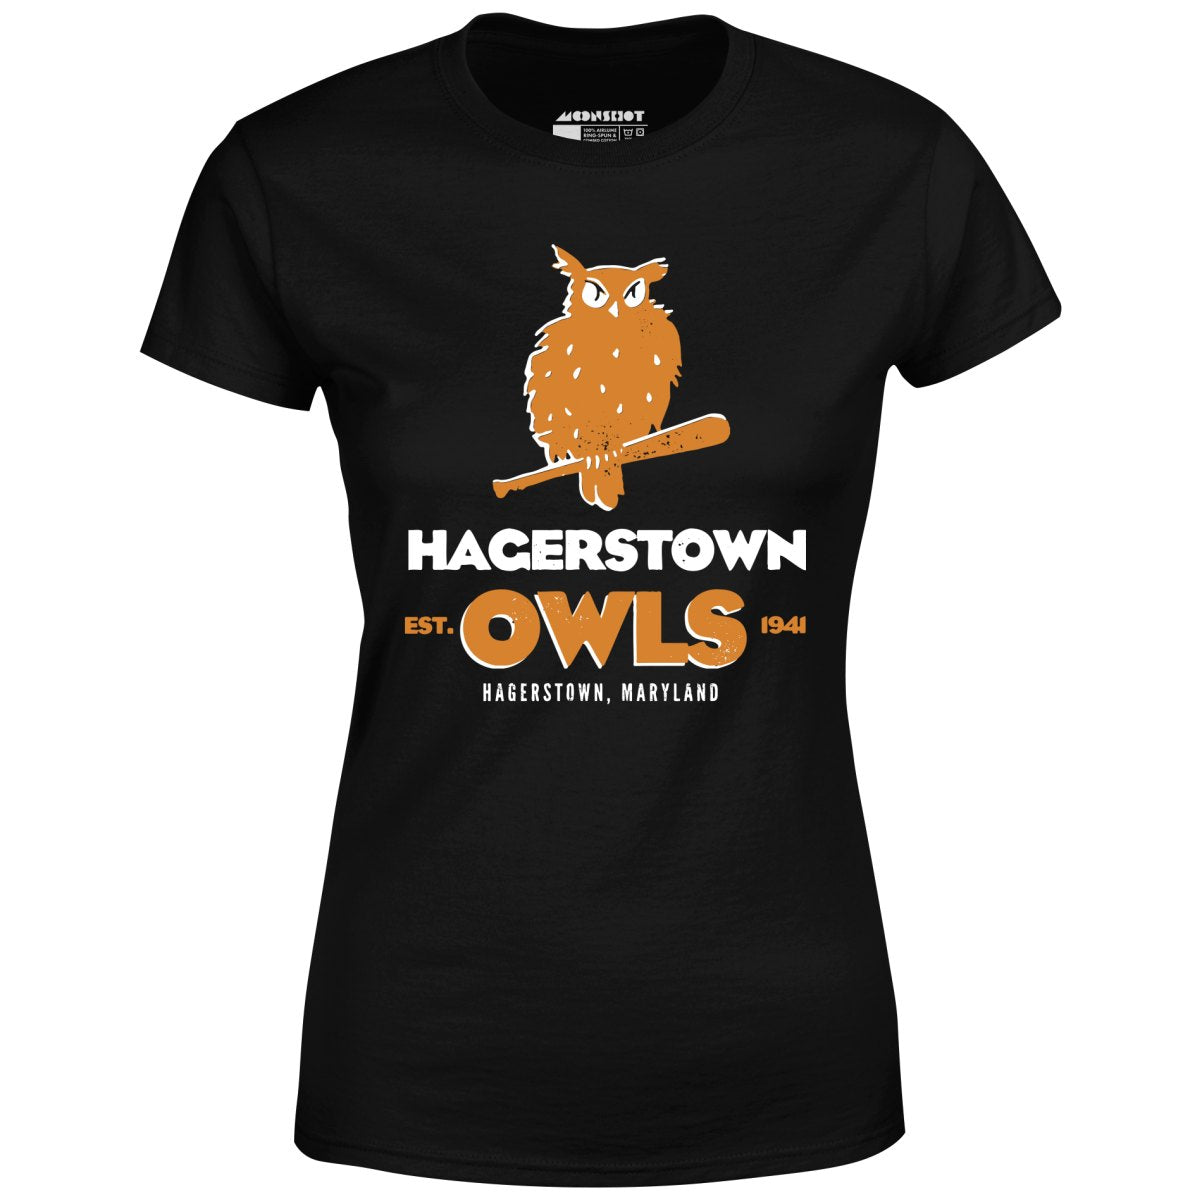 Hagerstown Owls - Maryland - Vintage Defunct Baseball Teams - Women's T-Shirt